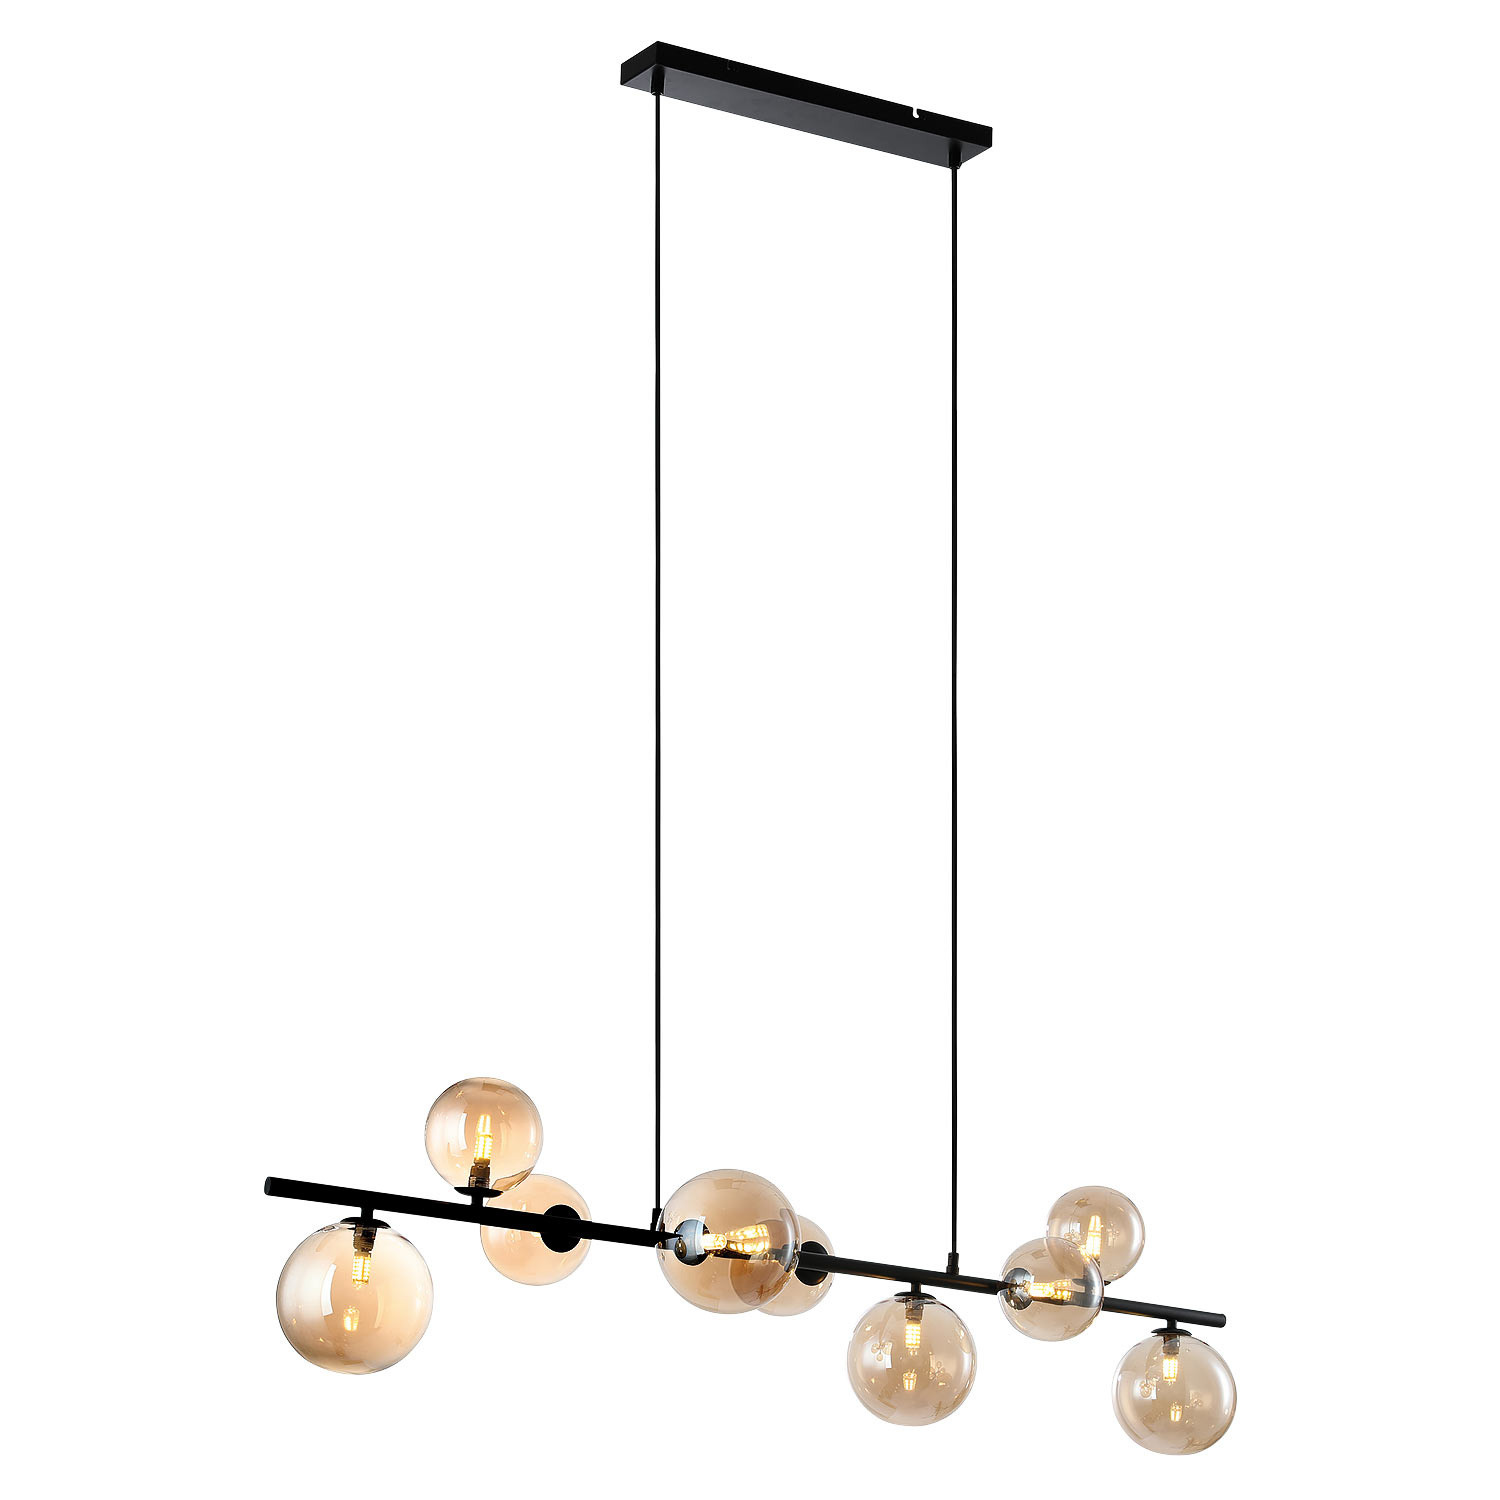 Freelight Hanglamp Calcio 9 lichts L 125 cm excl. 9x G9 LED amber glas zwart